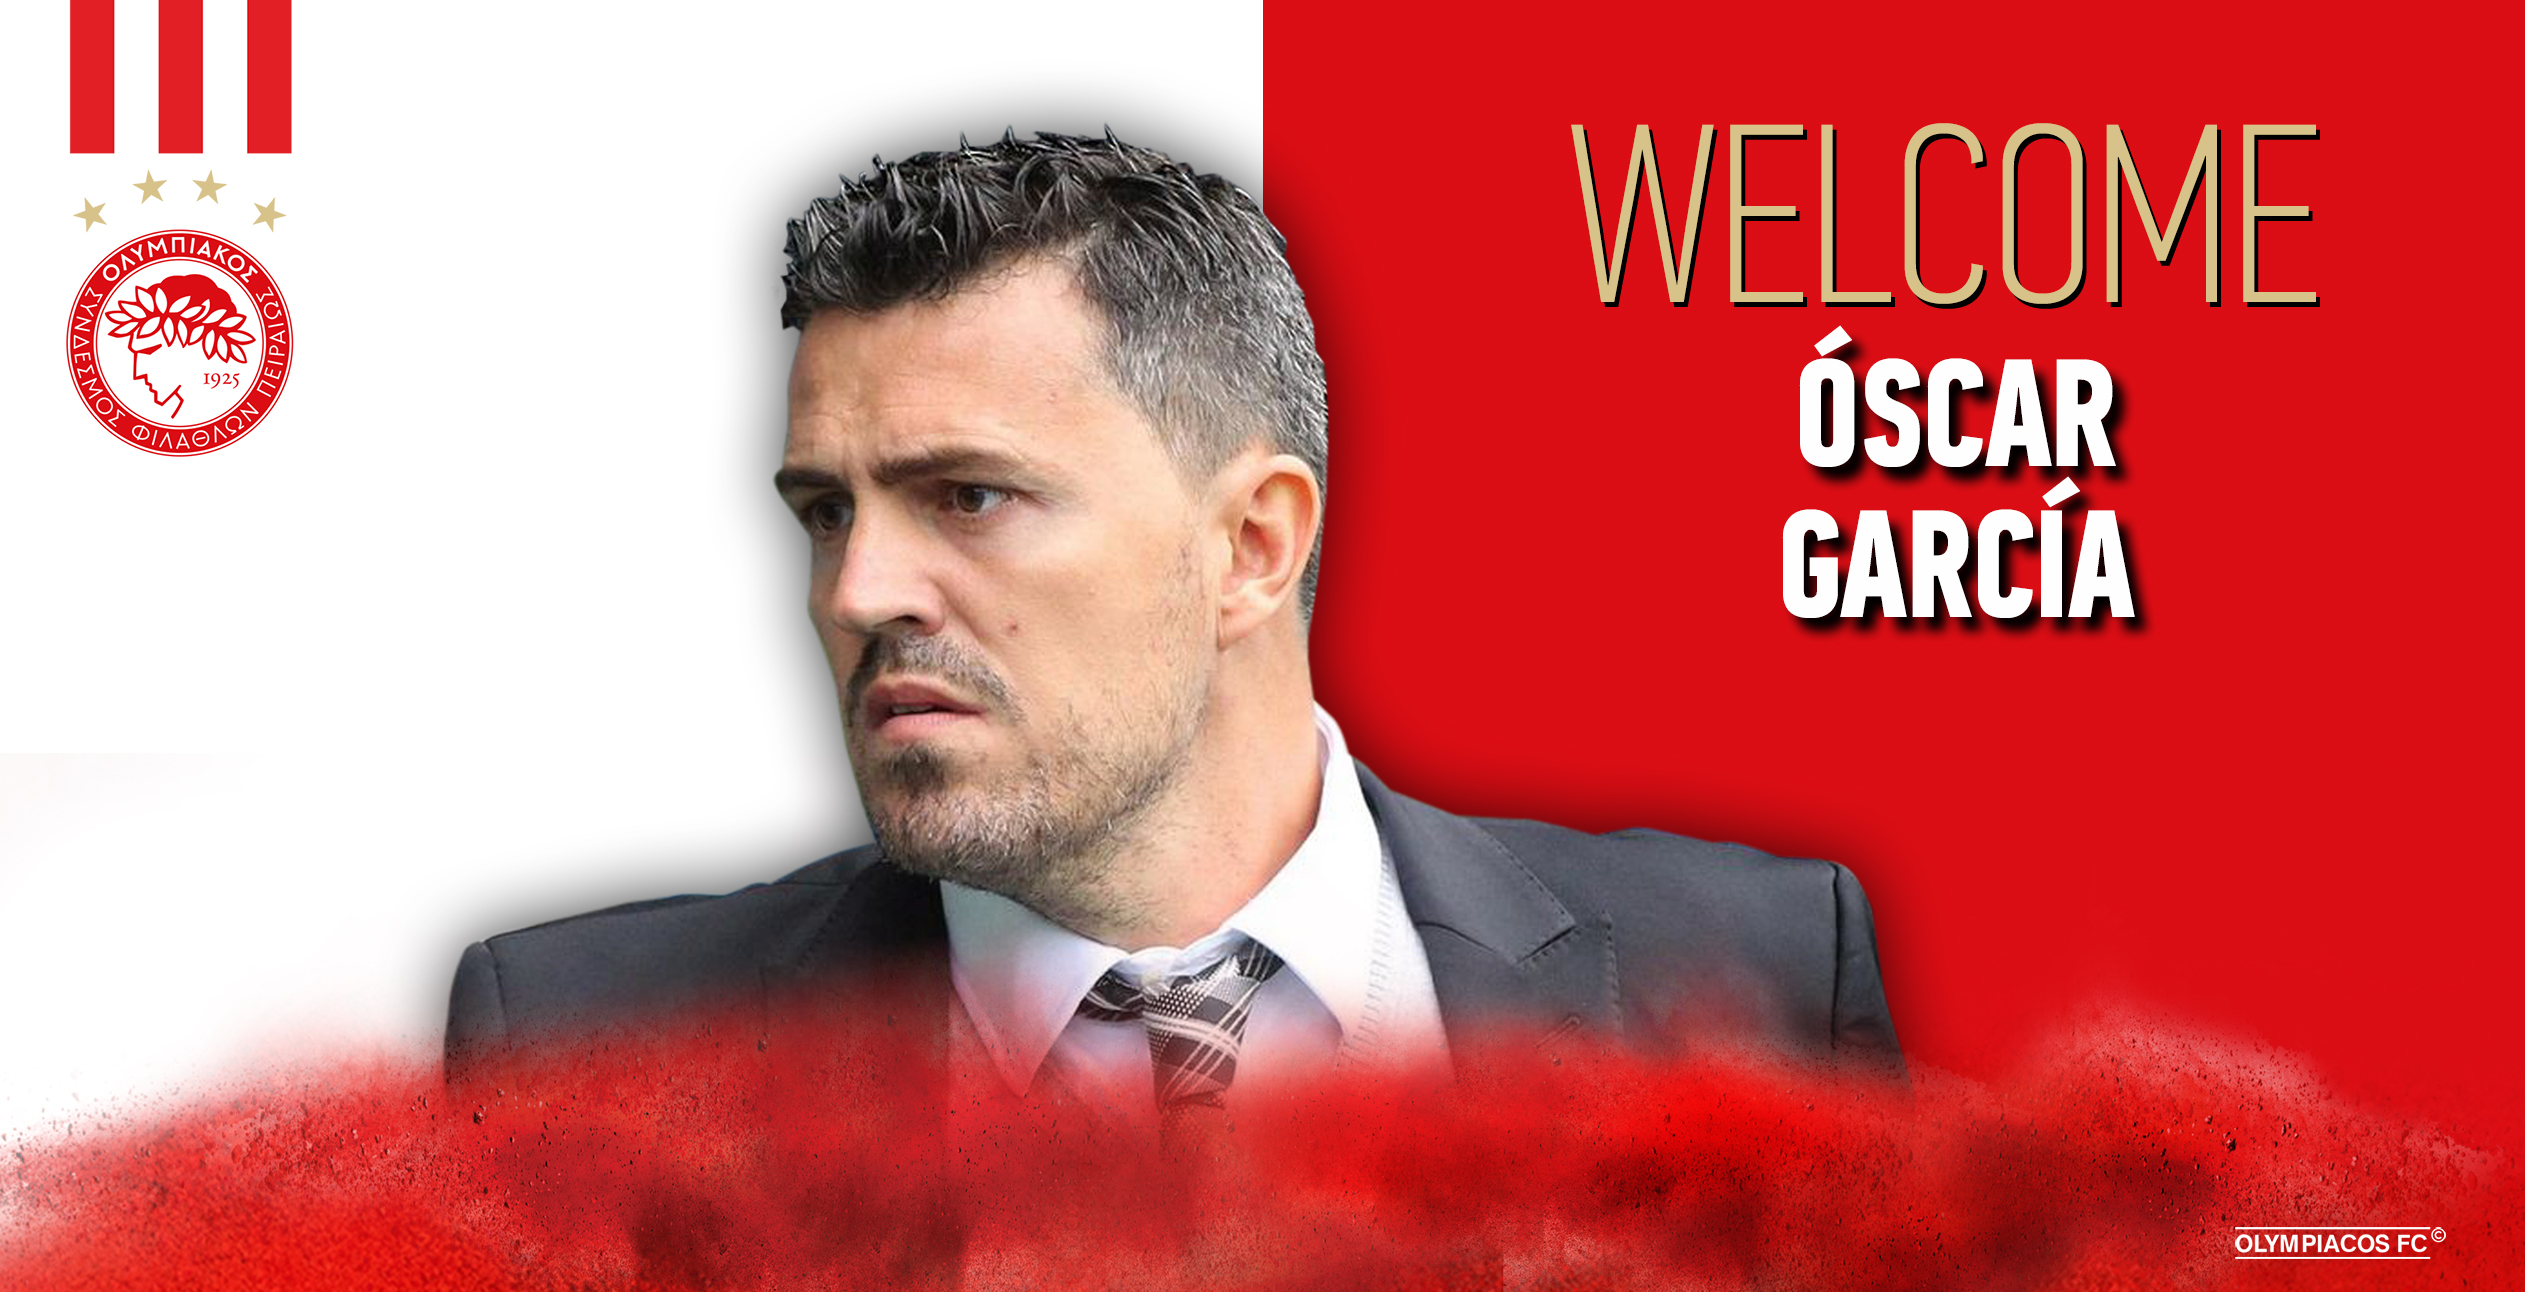 Oscar Garcia is the new coach of Olympiacos!